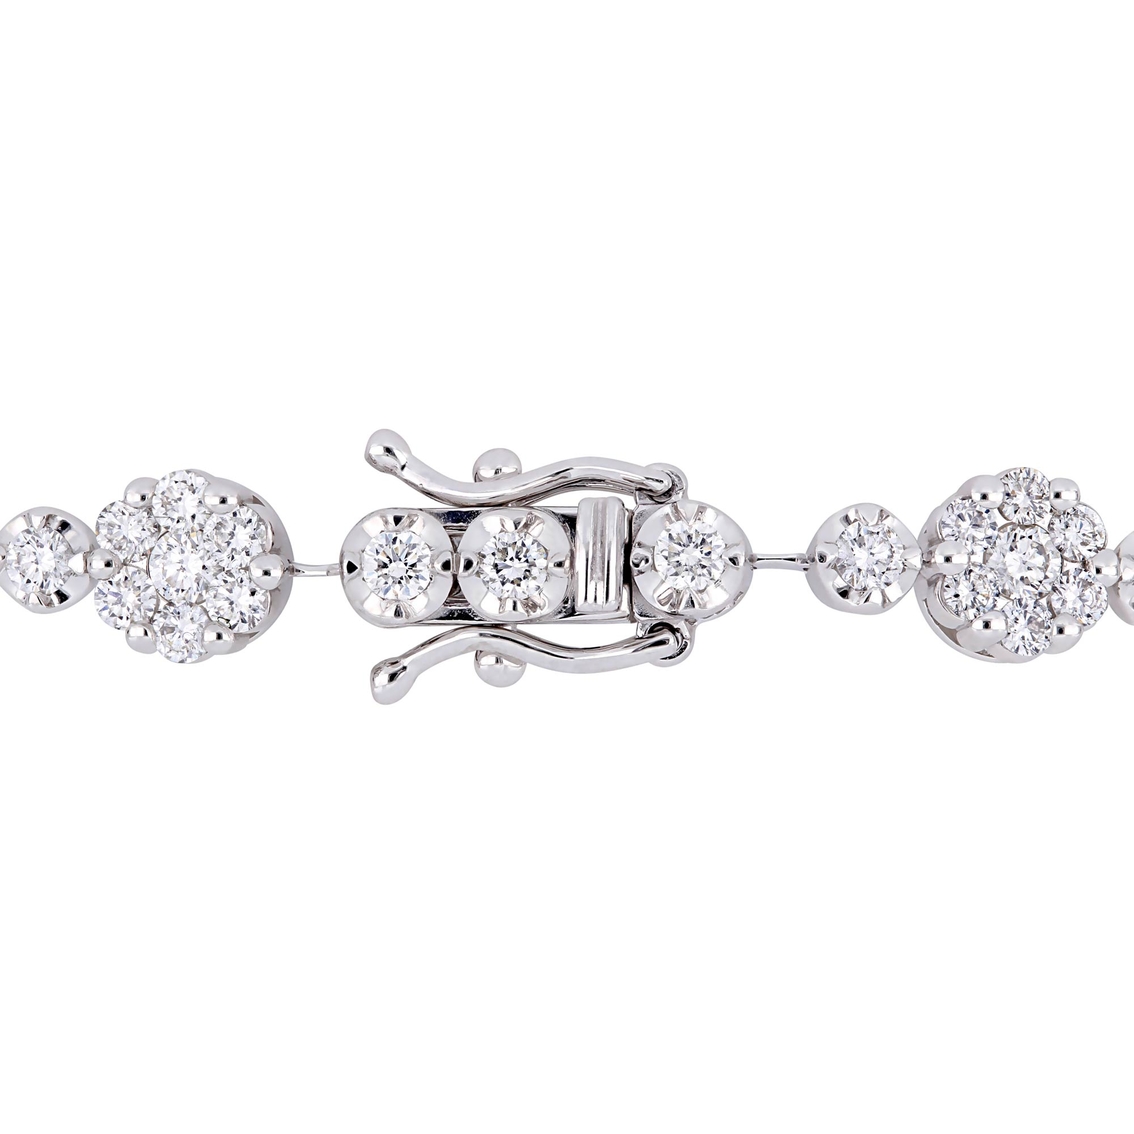 Diamore 14K White Gold 3 3/4 CTW Diamond Bracelet - Image 2 of 3